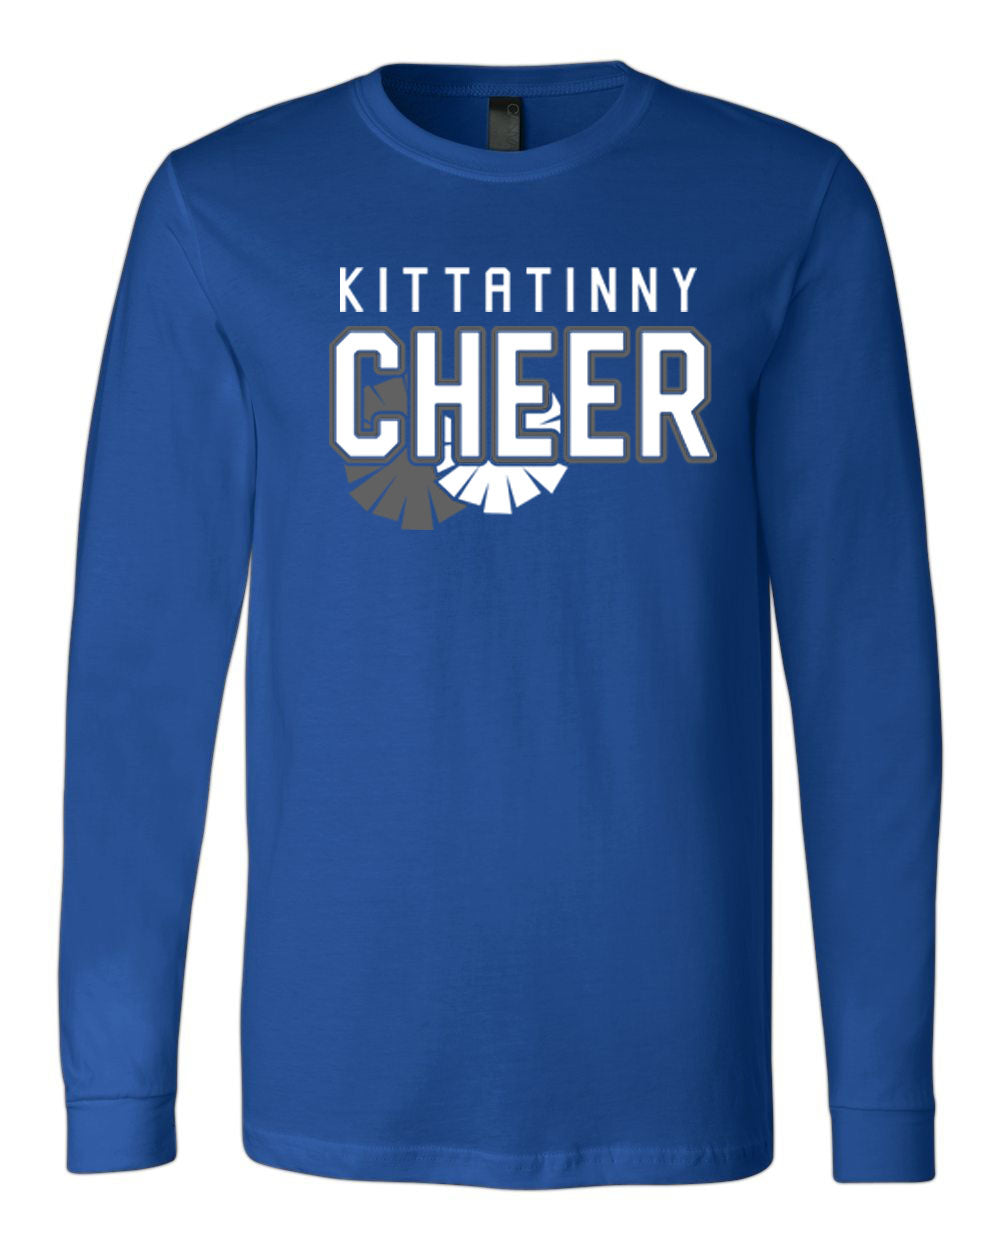 Kittatinny Cheer Design 4 Long Sleeve Shirt